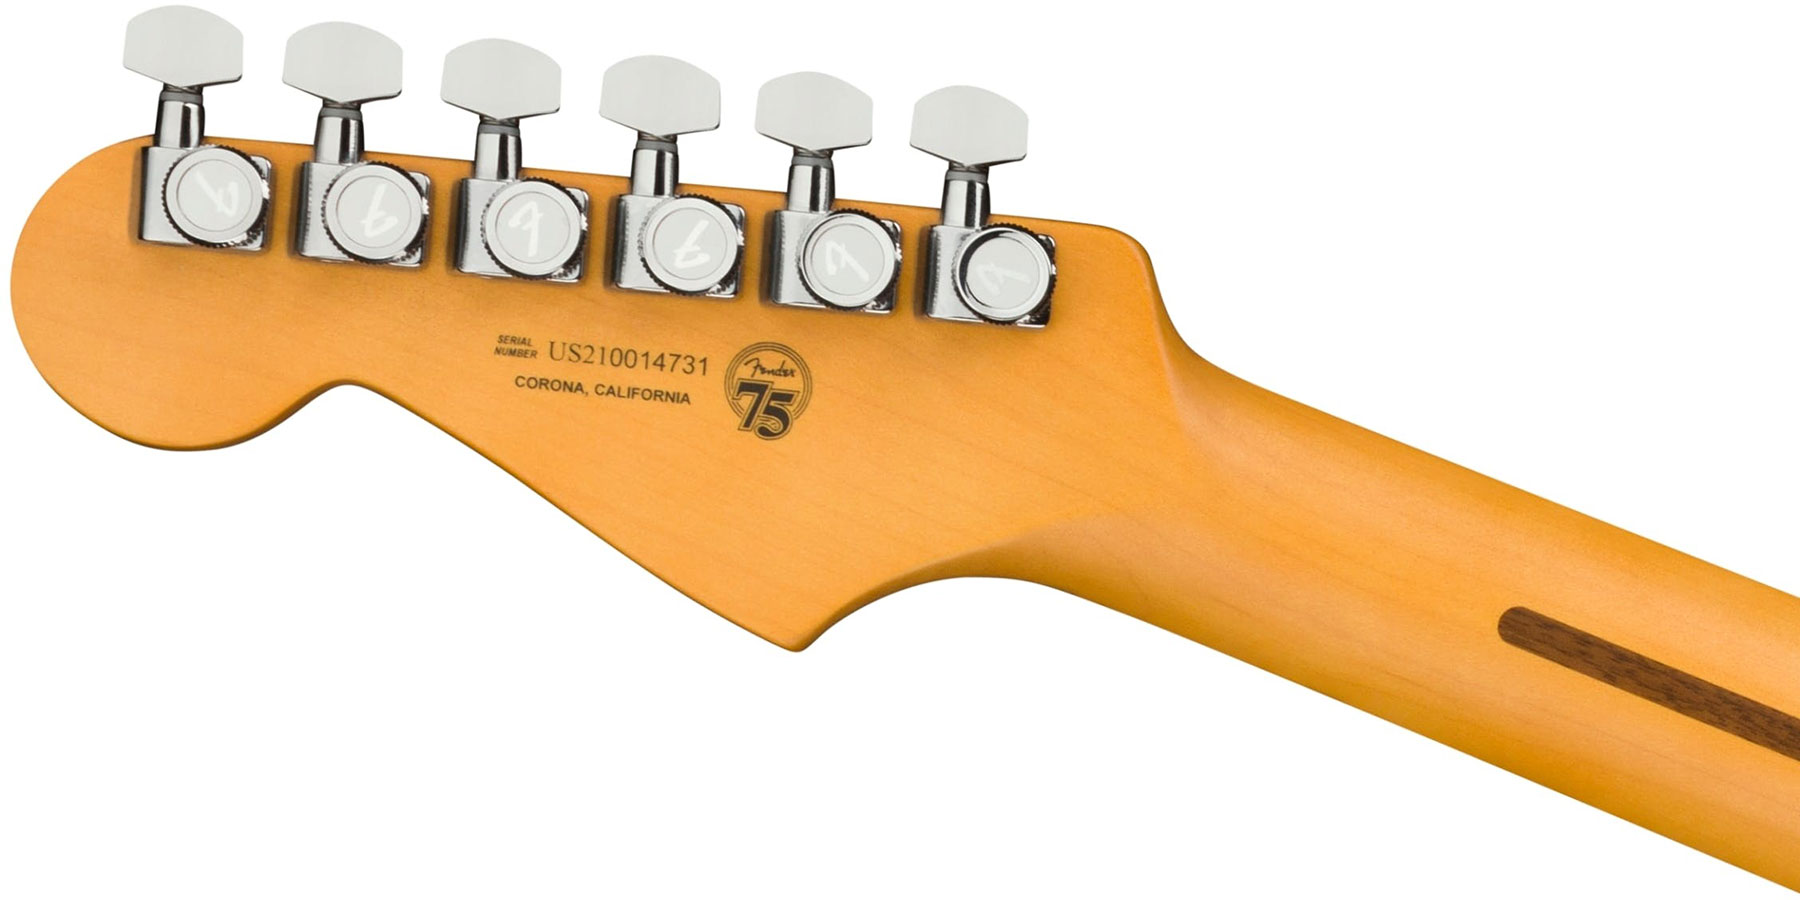 Fender Strat American Ultra Ltd Usa 3s Trem Eb - Plum Metallic - Str shape electric guitar - Variation 4